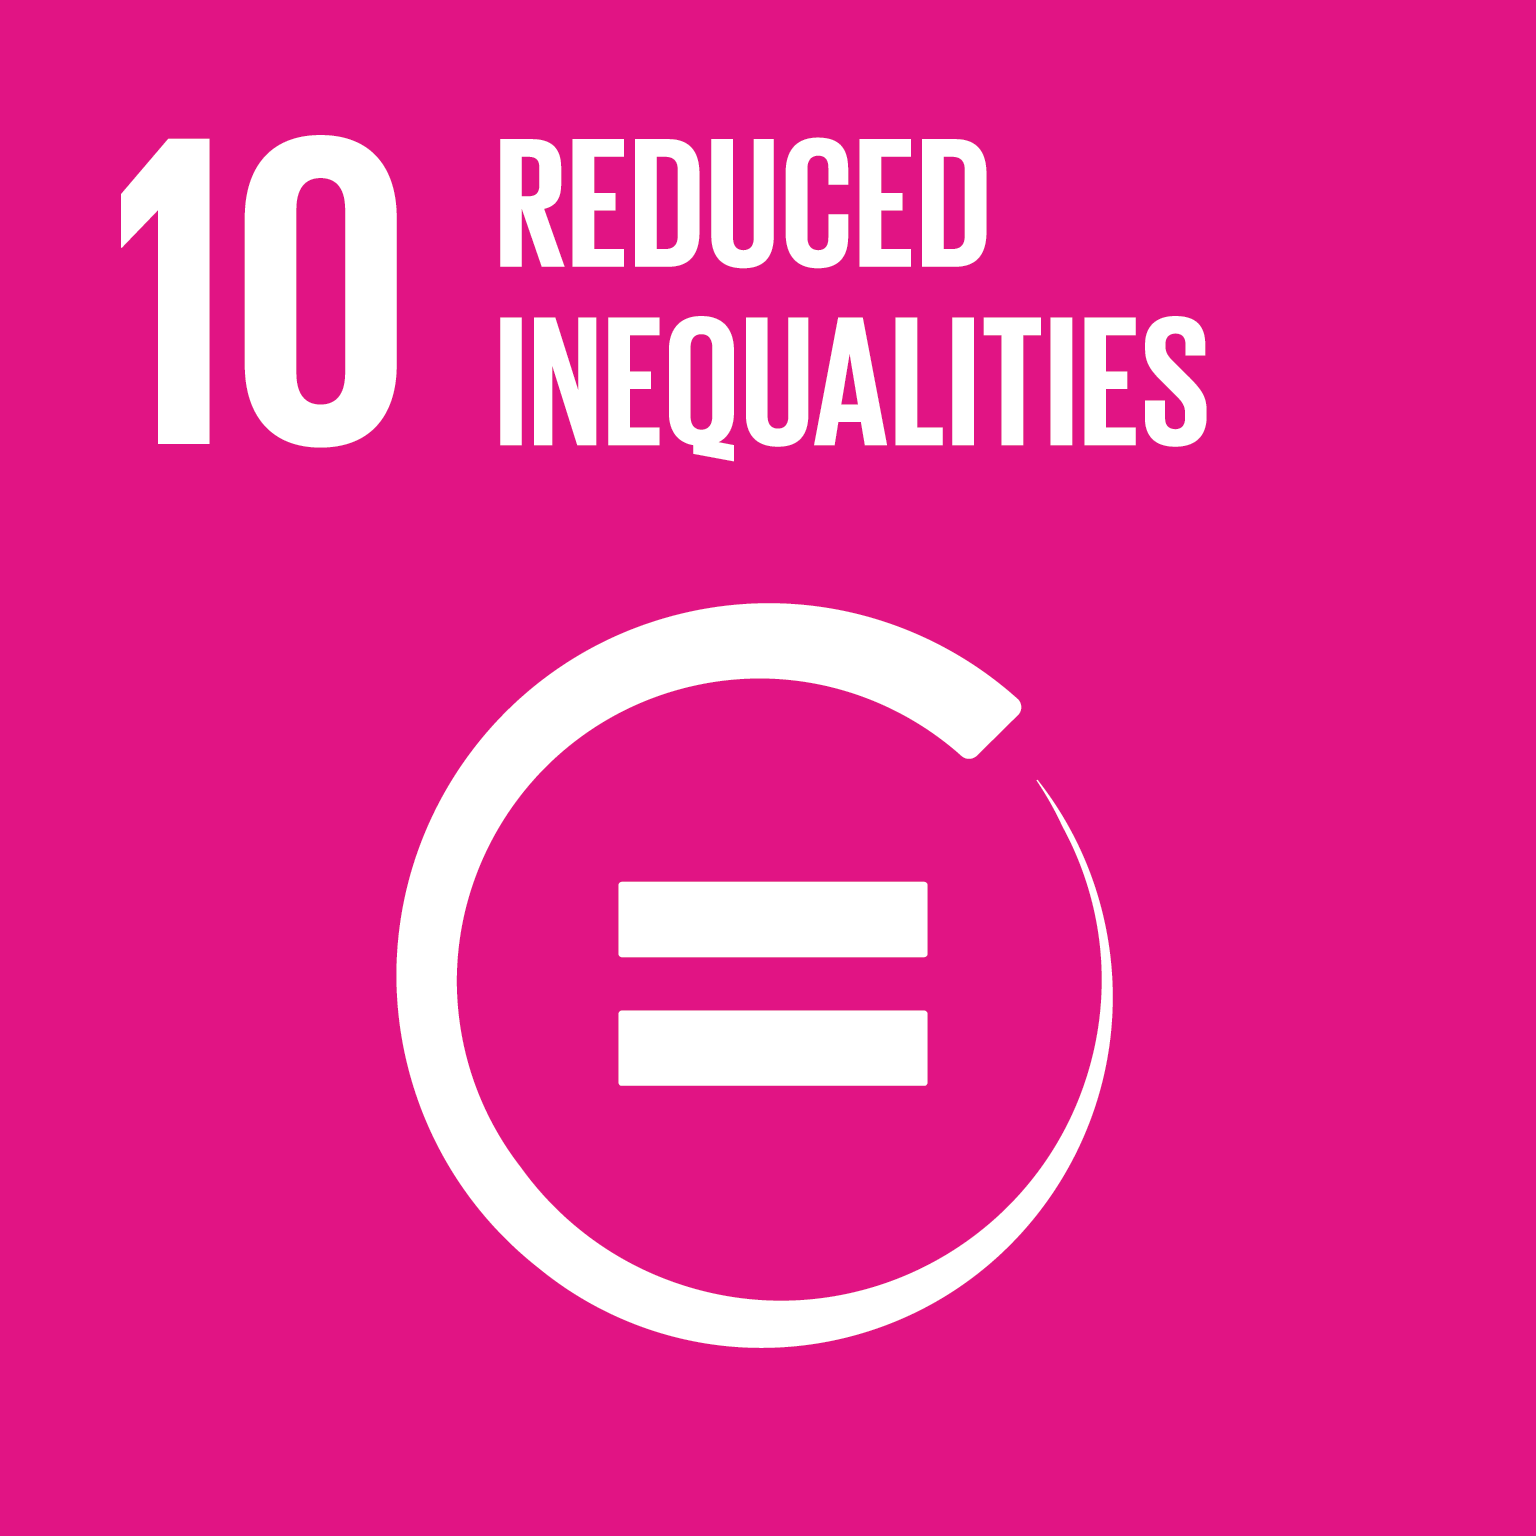 10: Reduced inequalities